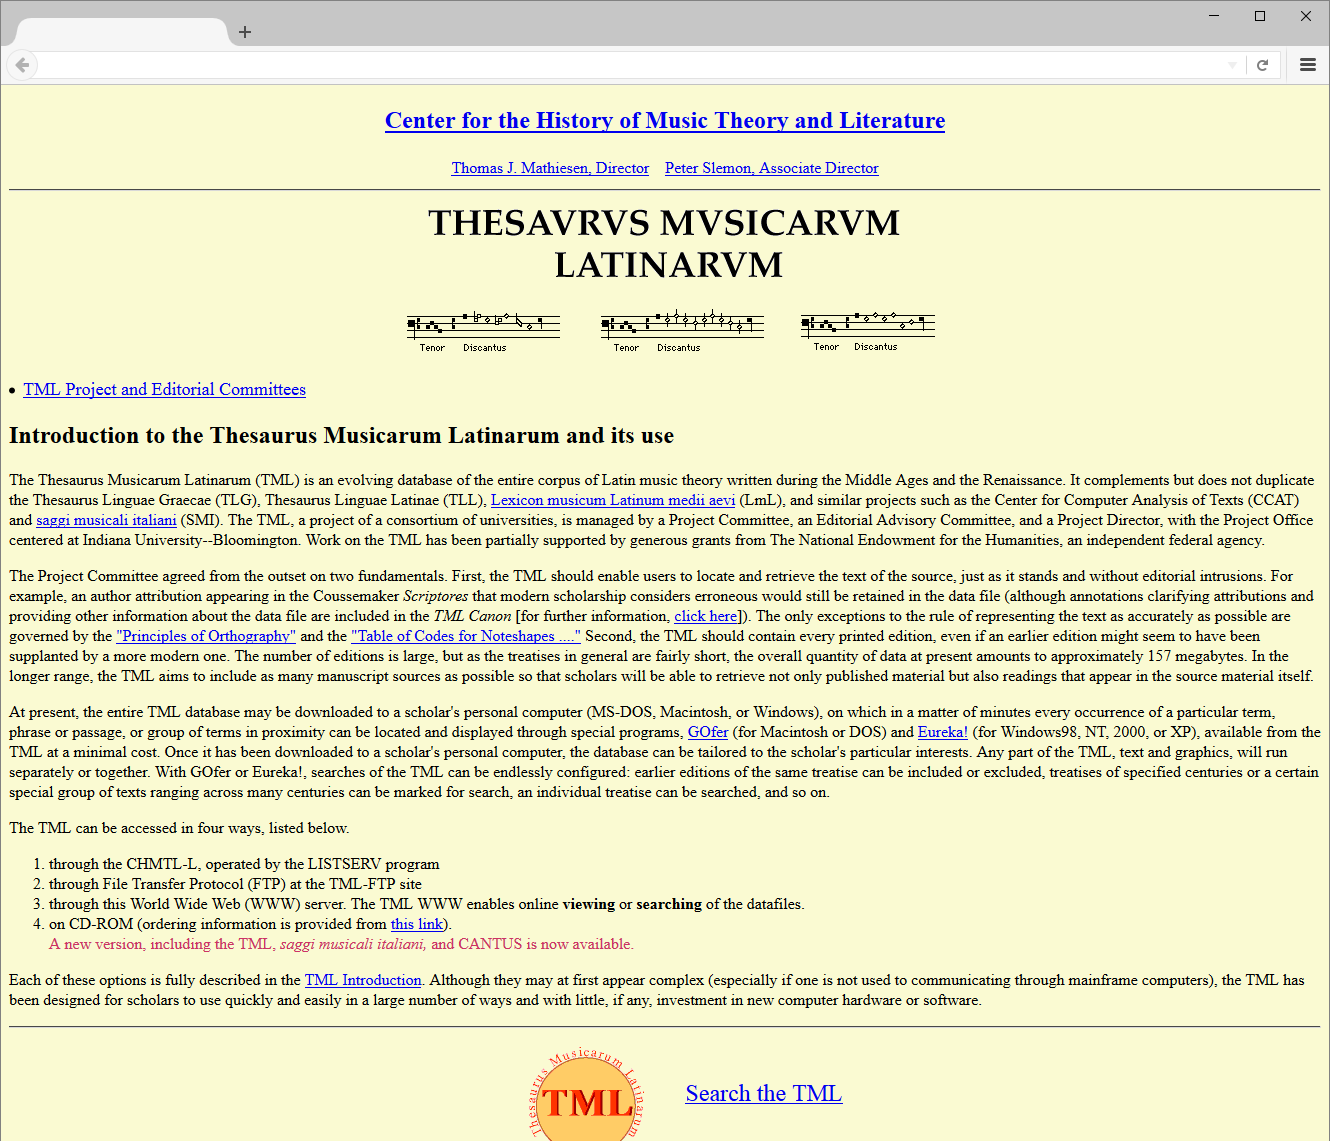 The TML classic website